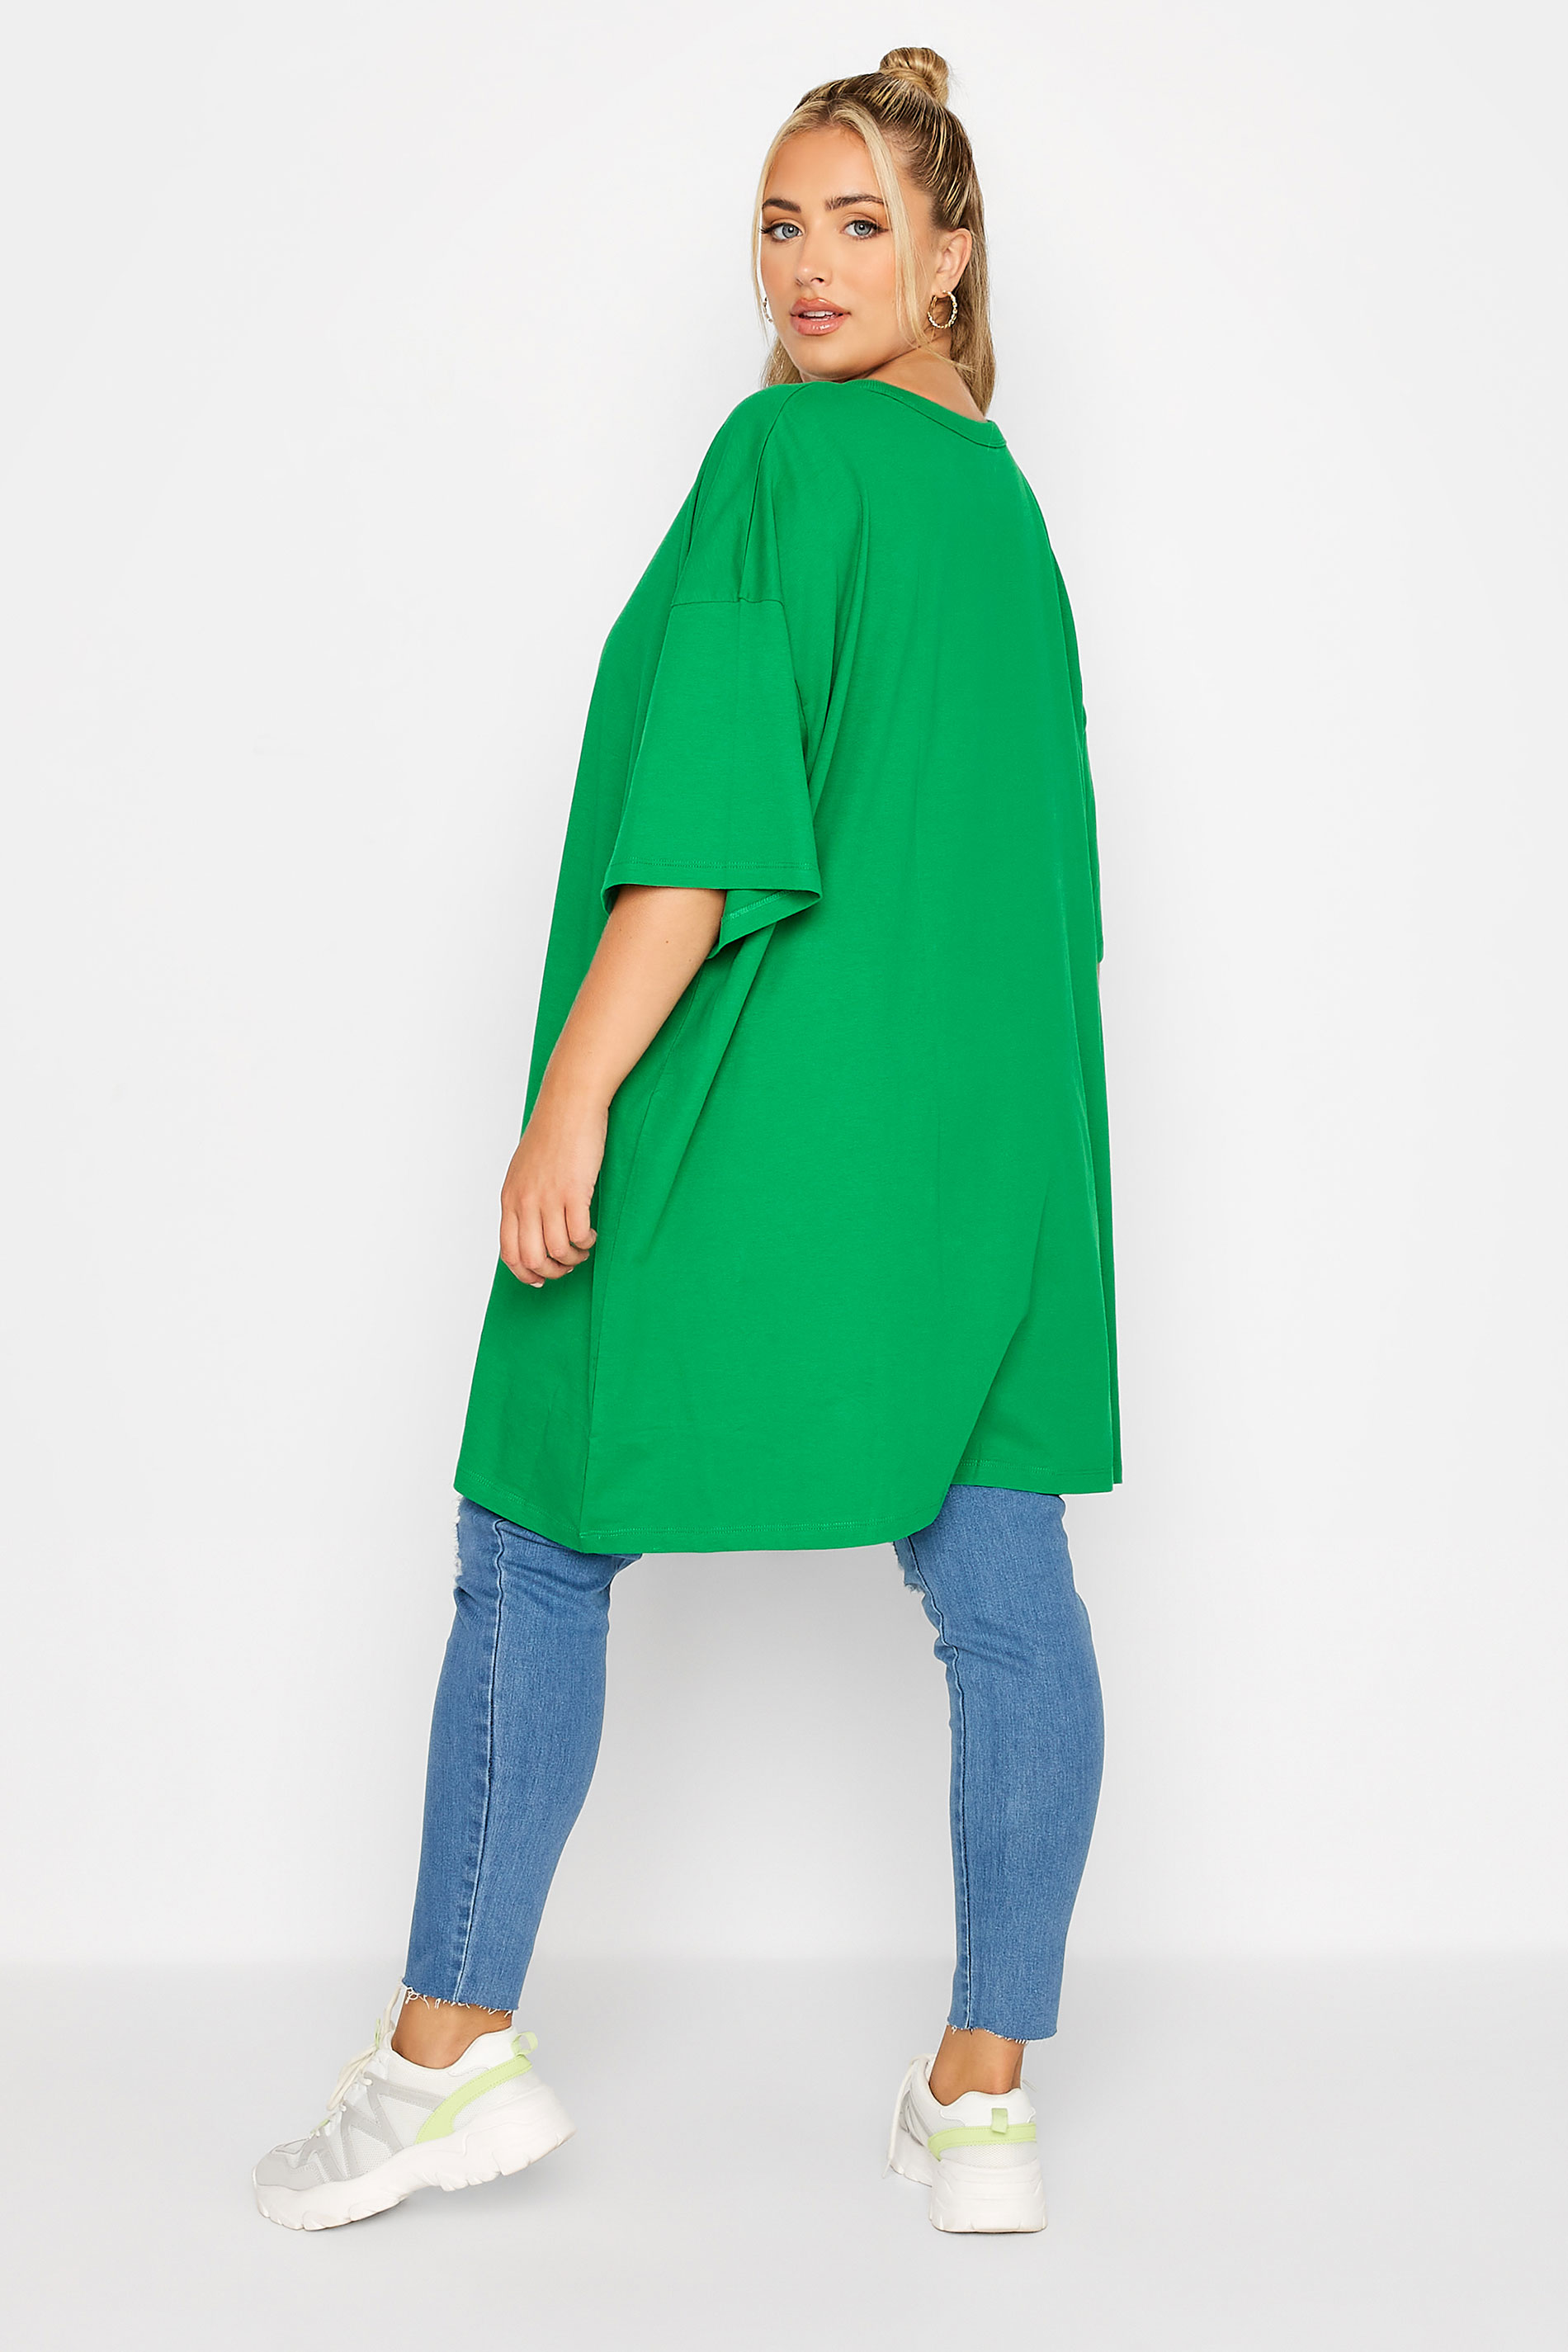 Plus Size Green Oversized Tunic T-Shirt Dress | Yours Clothing 3